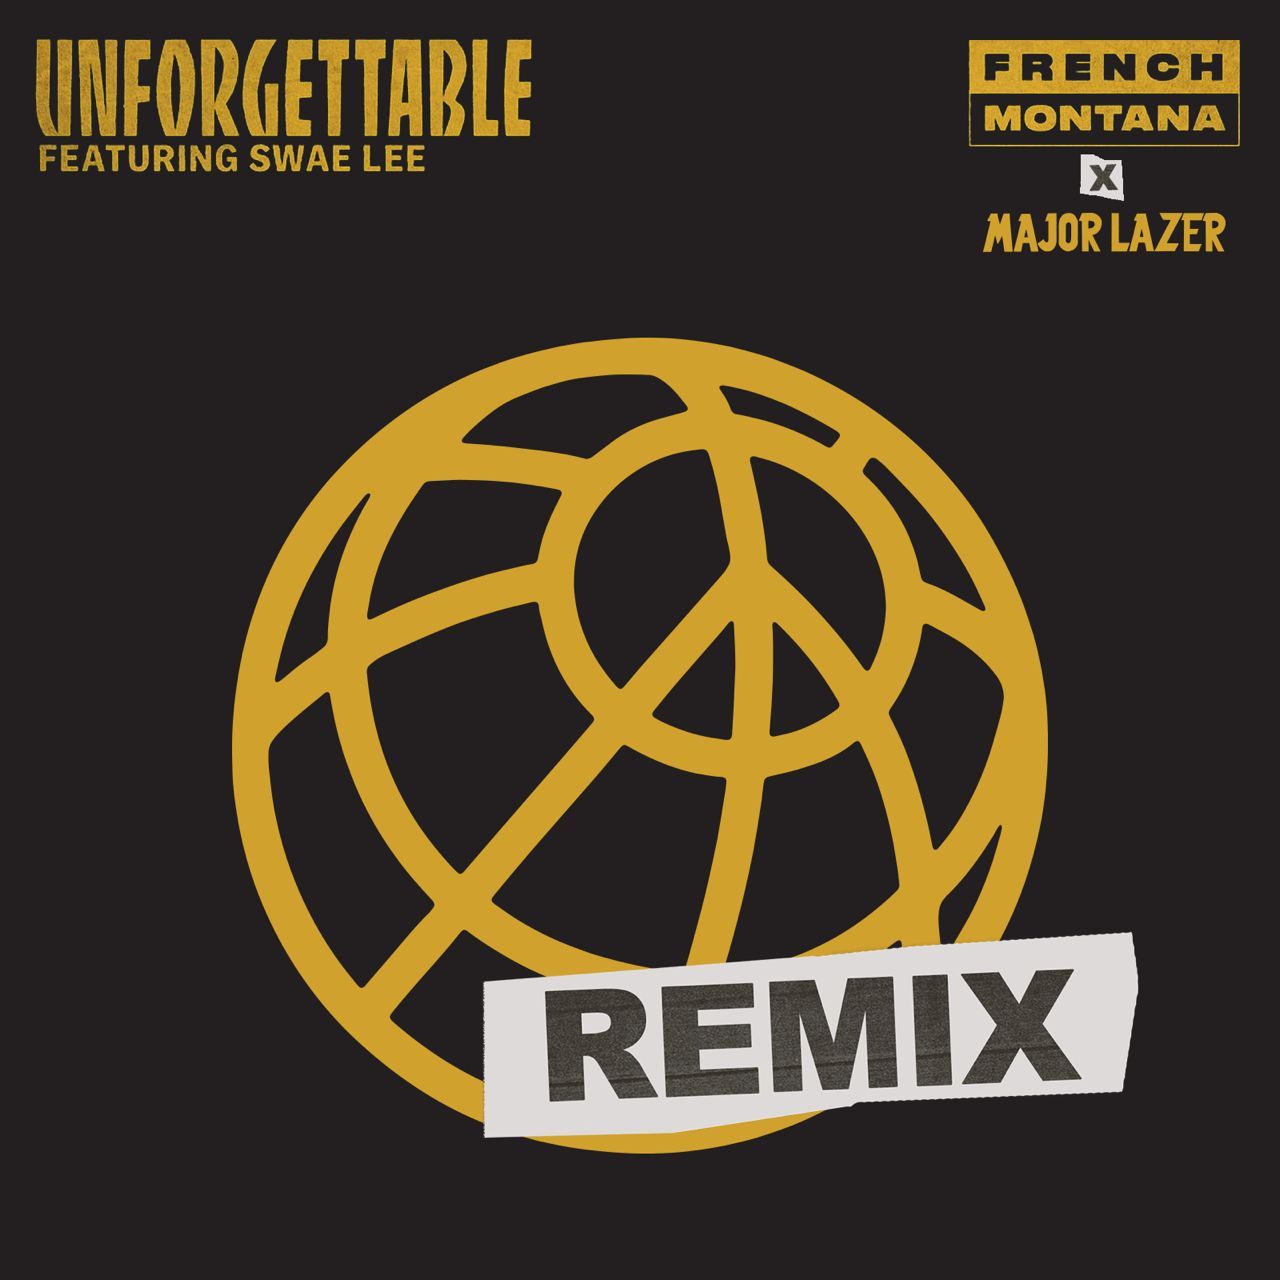 Major lazer remix. Swae Lee Unforgettable. Major Lazer. French Montana feat. Swae Lee - Unforgettable. French Montana Swae Lee.